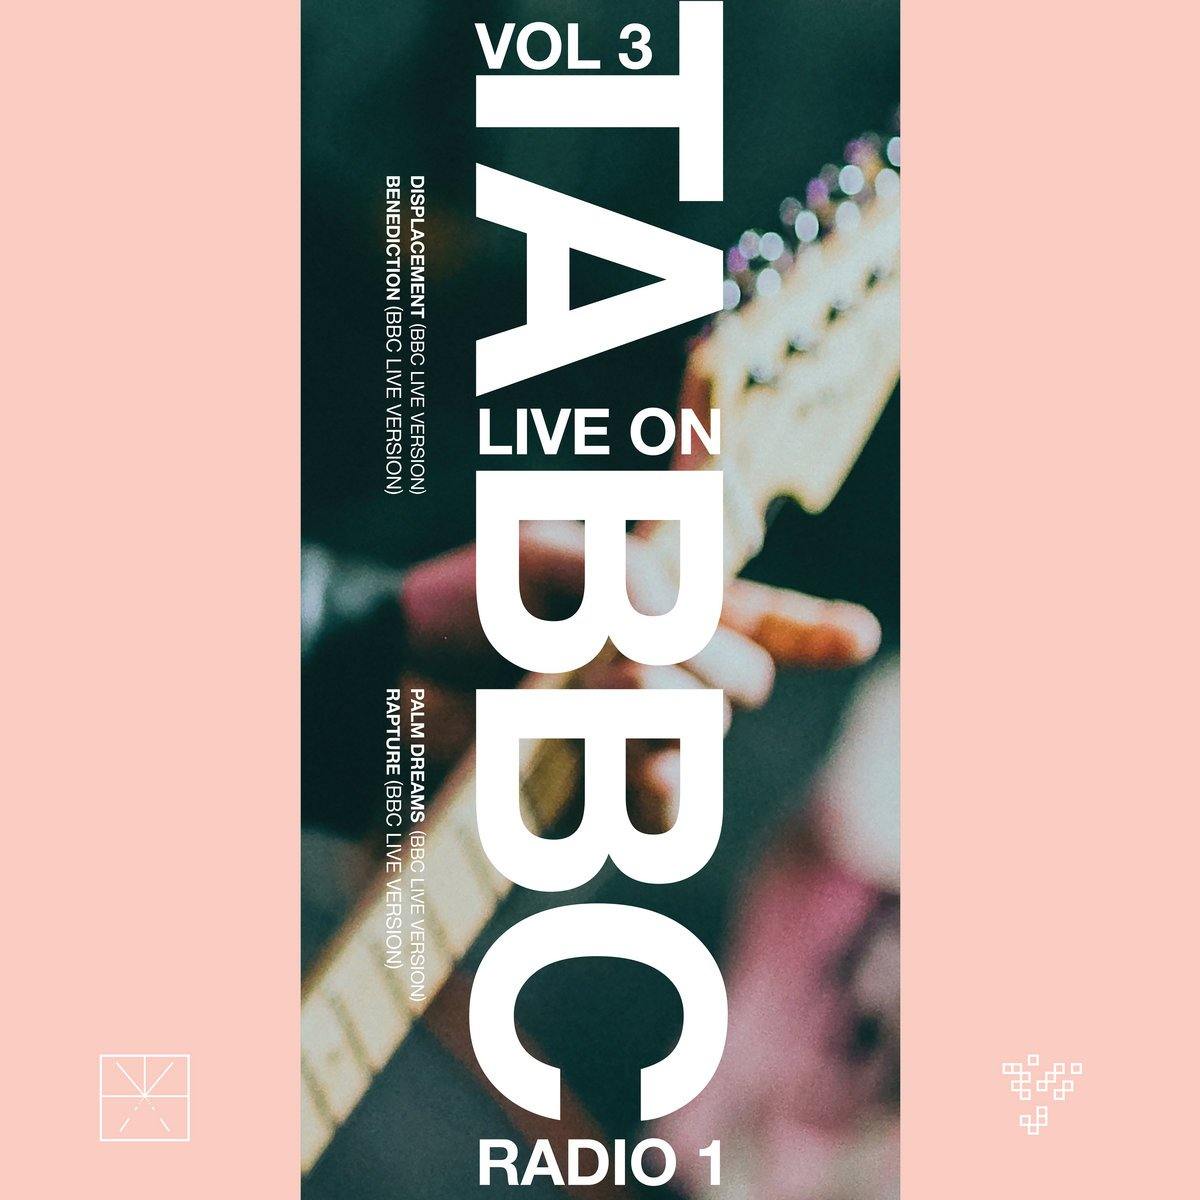 Buy – Touche Amore "Live On BBC Radio 1: Vol 3" 7" – Band & Music Merch – Cold Cuts Merch